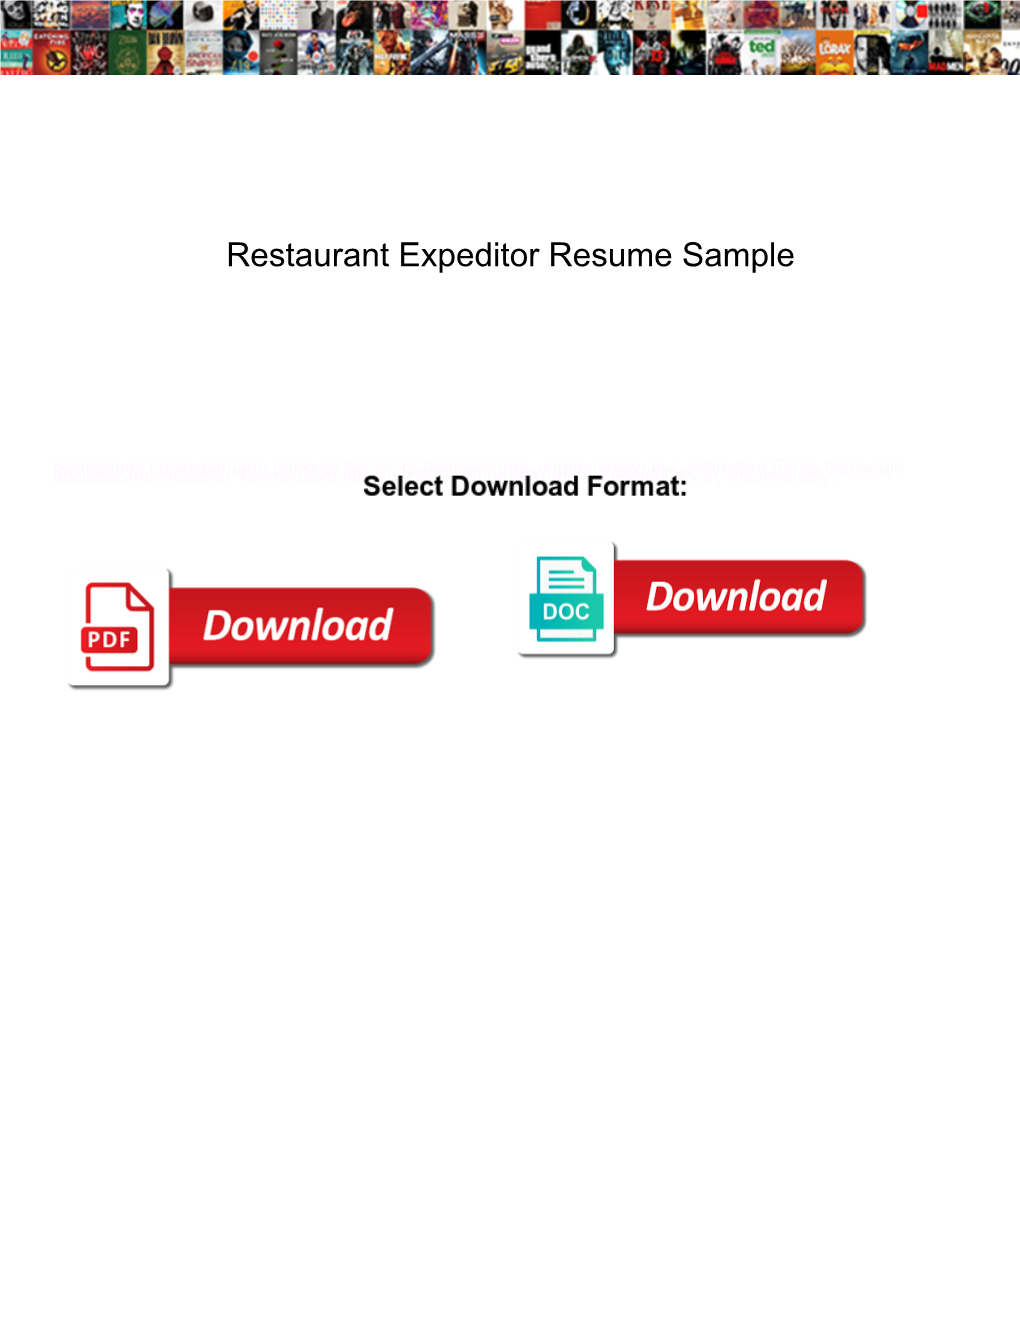 Restaurant Expeditor Resume Sample